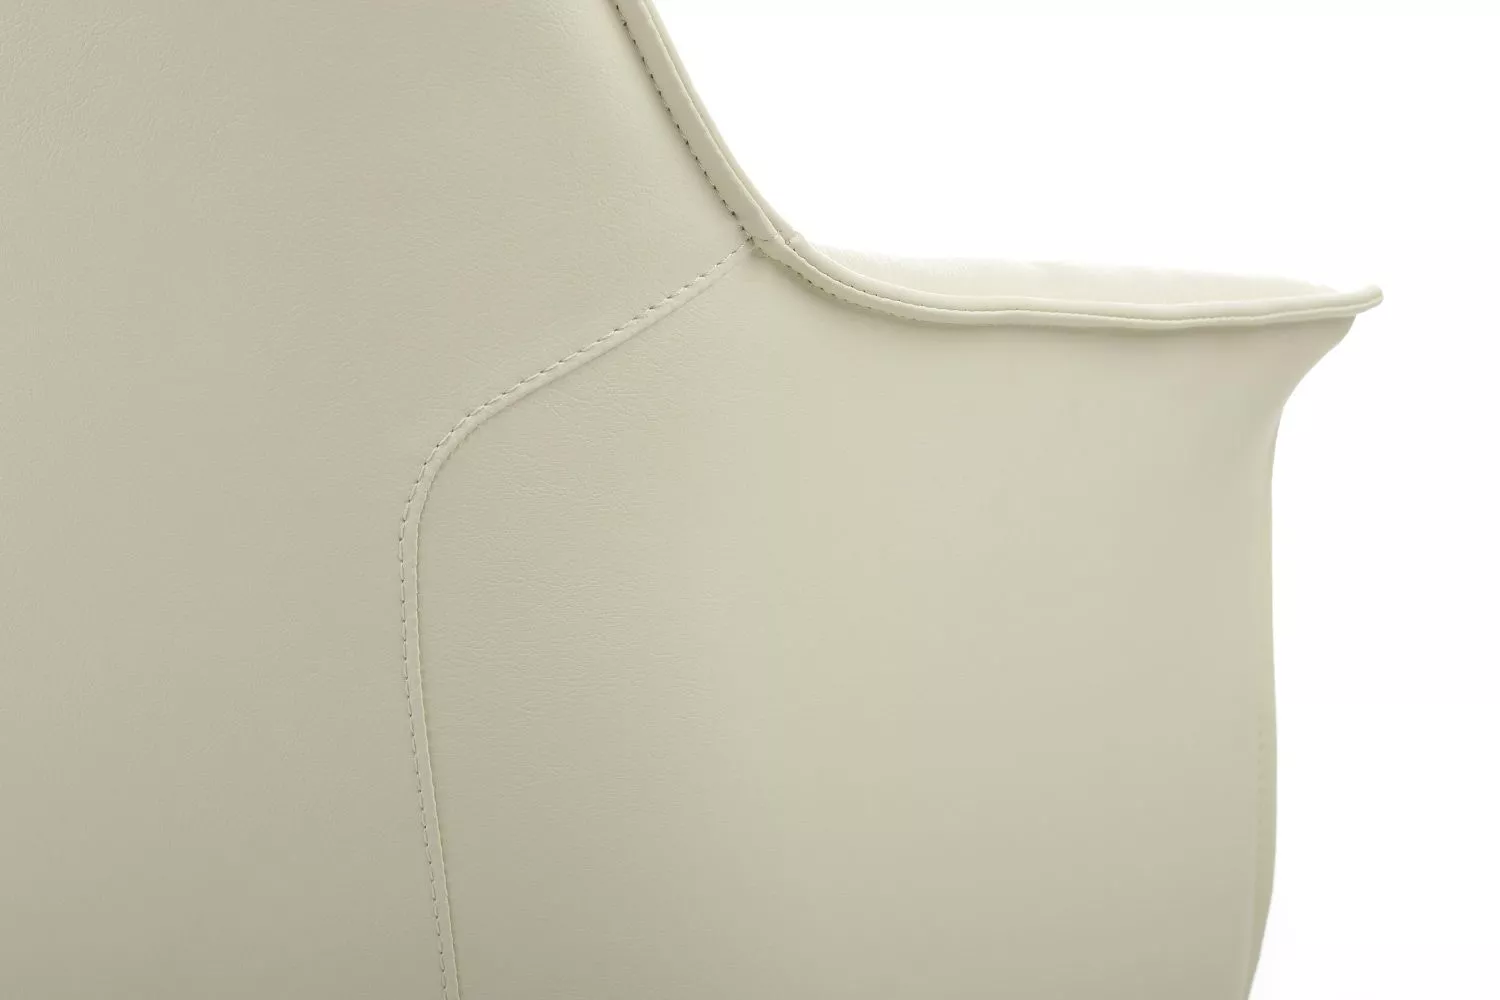 Кресло RIVA DESIGN Rosso-ST (C1918) белый